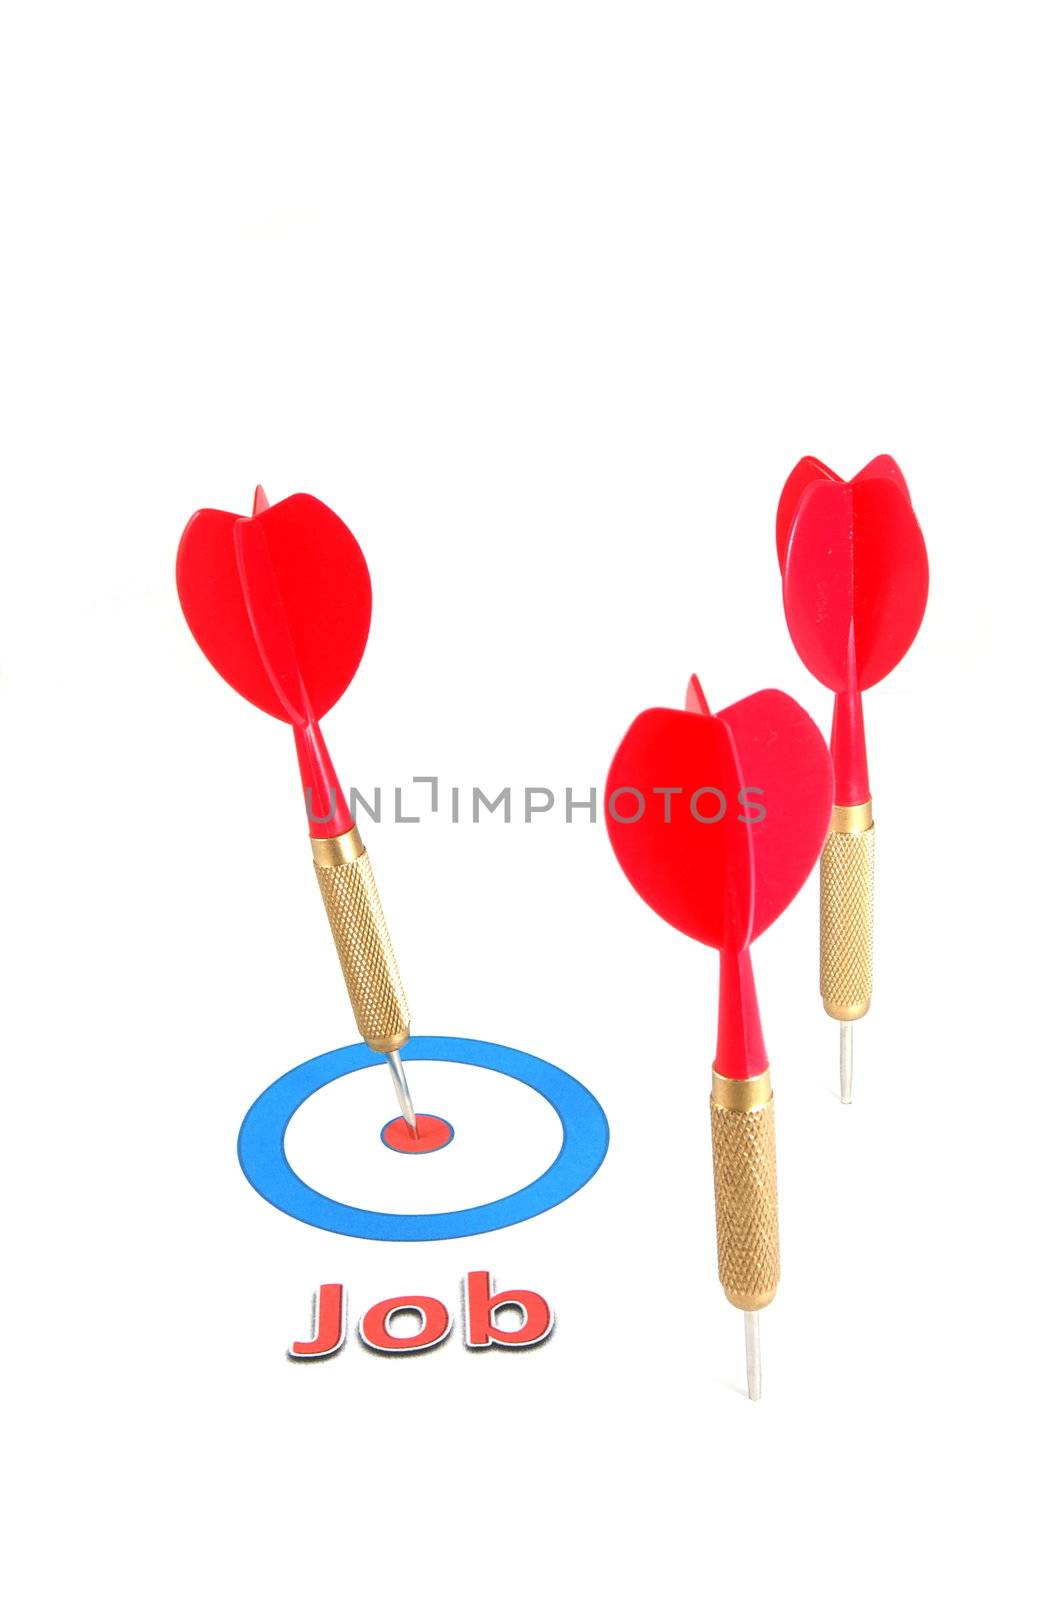 dart arrow job concept by gunnar3000